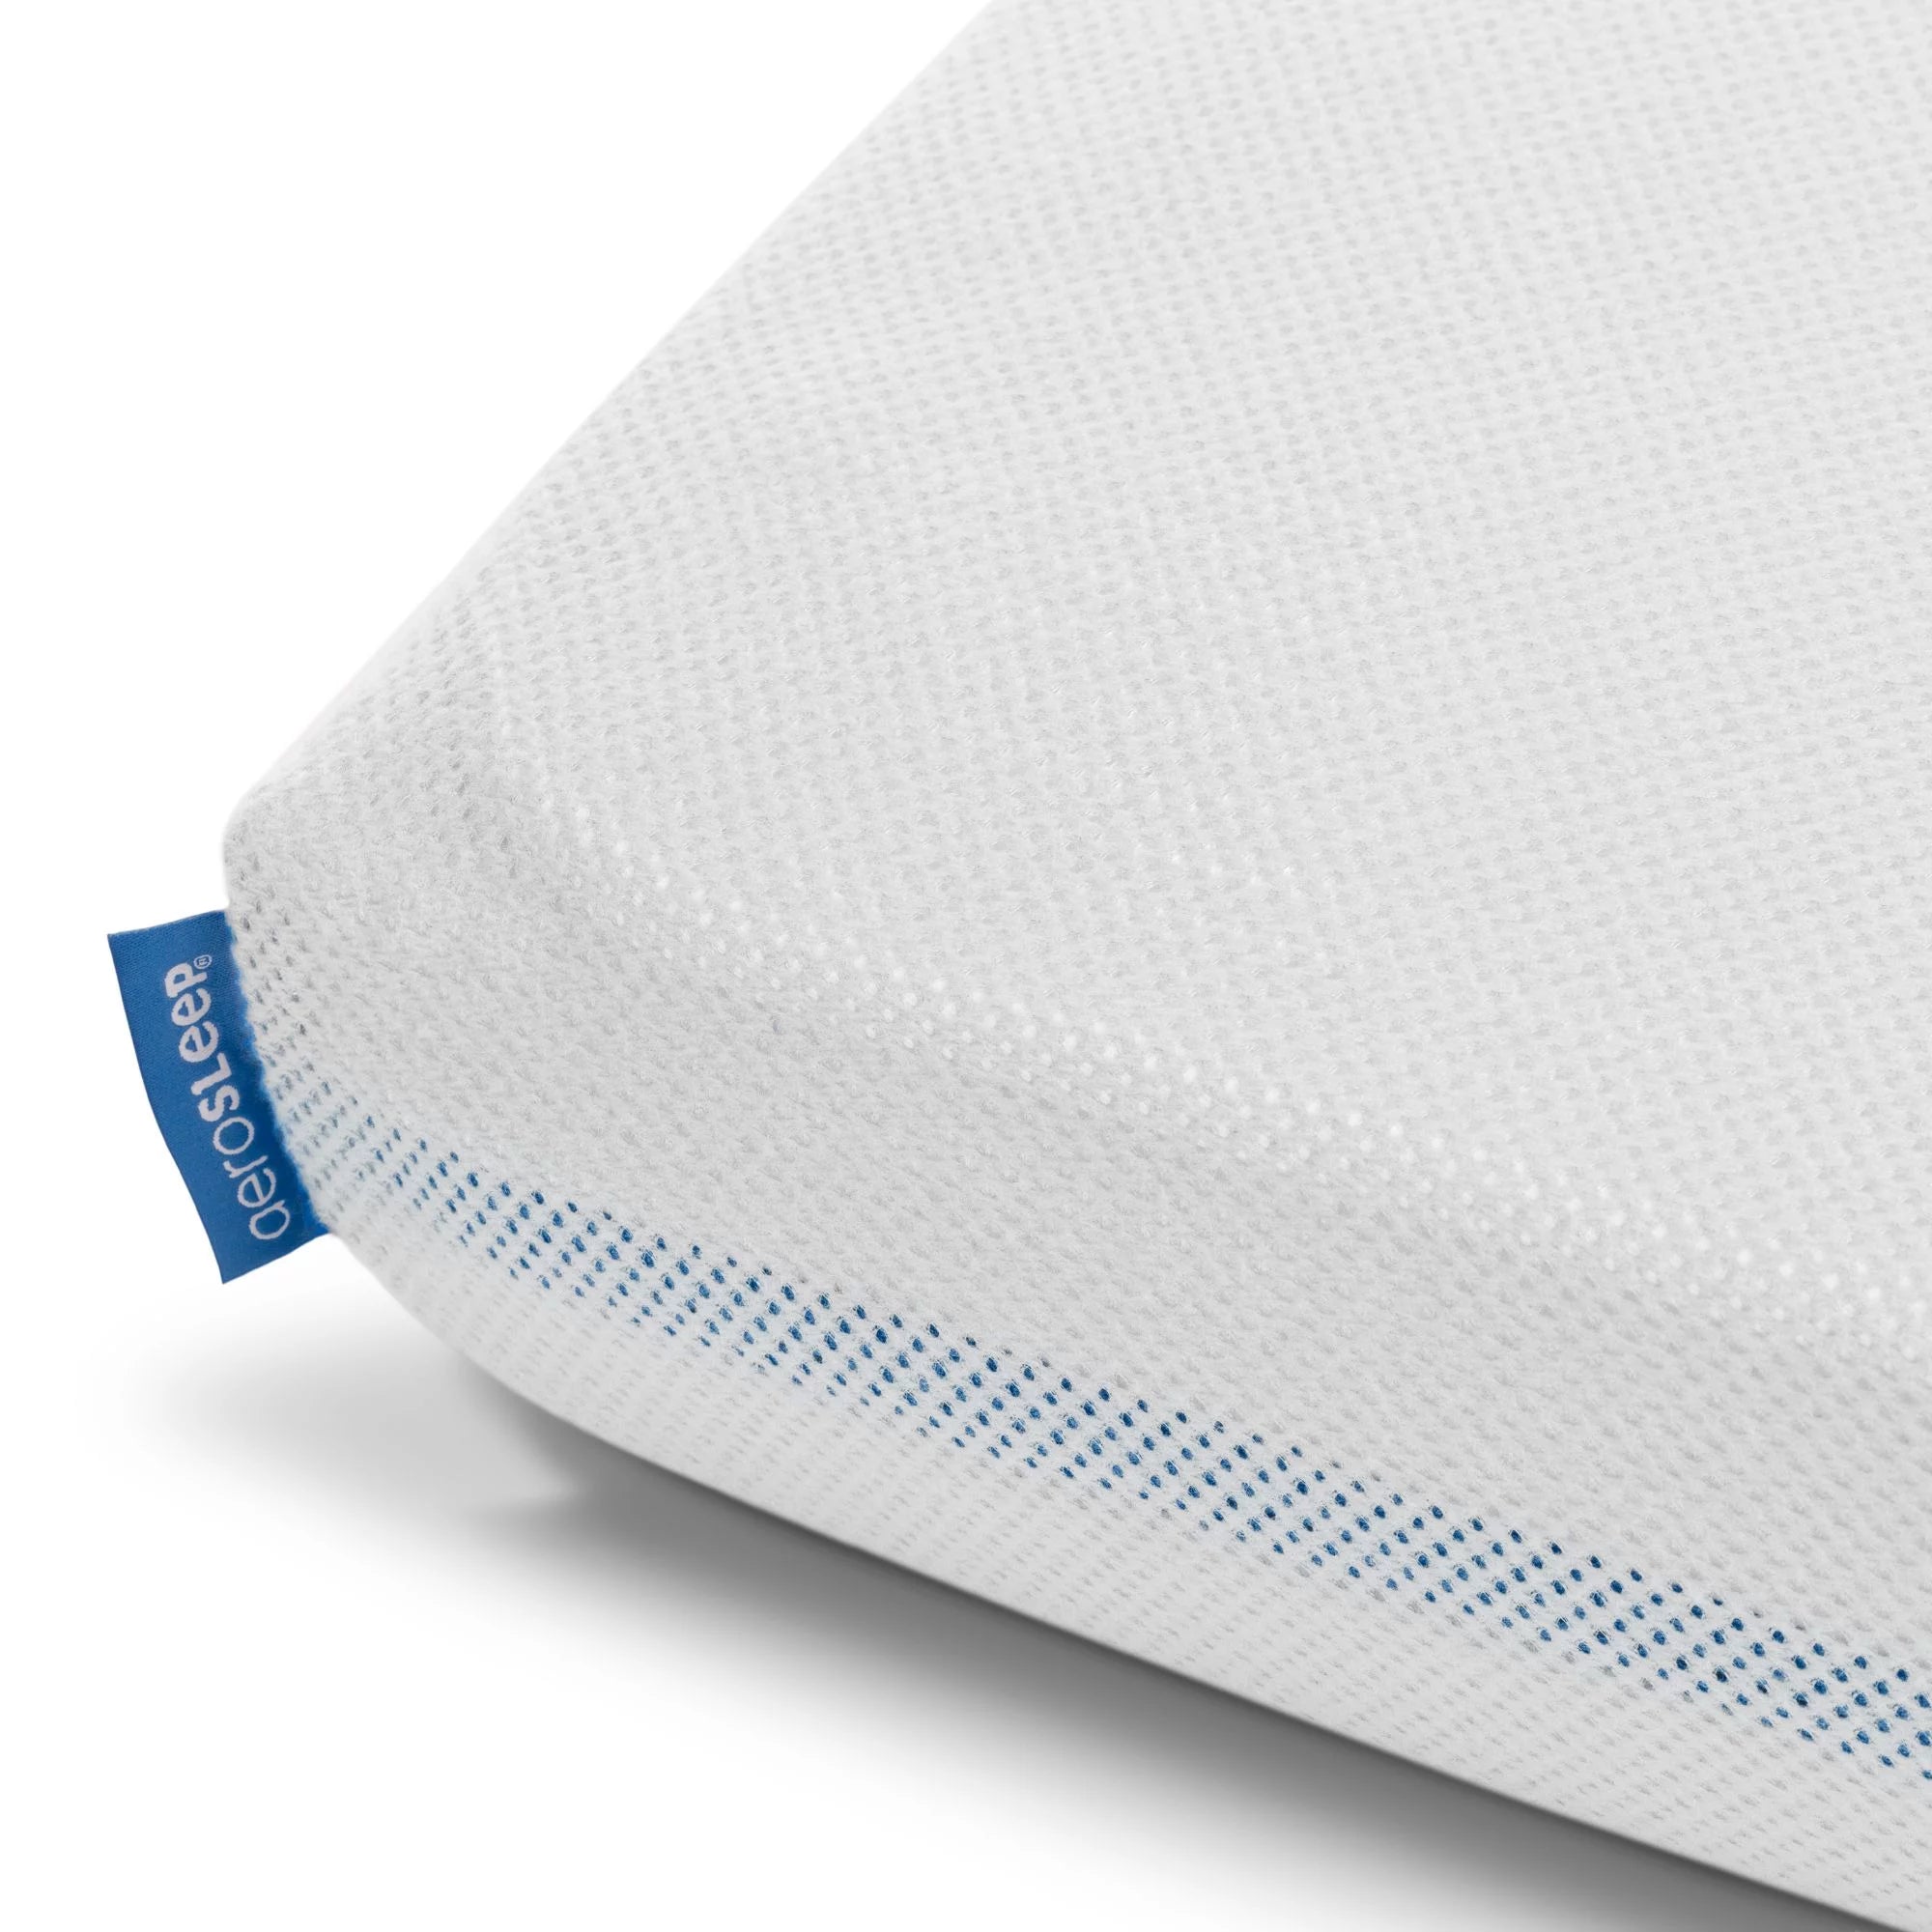 Aerosleep AeroSleep Sleep Safe Fitted Sheet 60x120 White / 60x120 - Hola BB